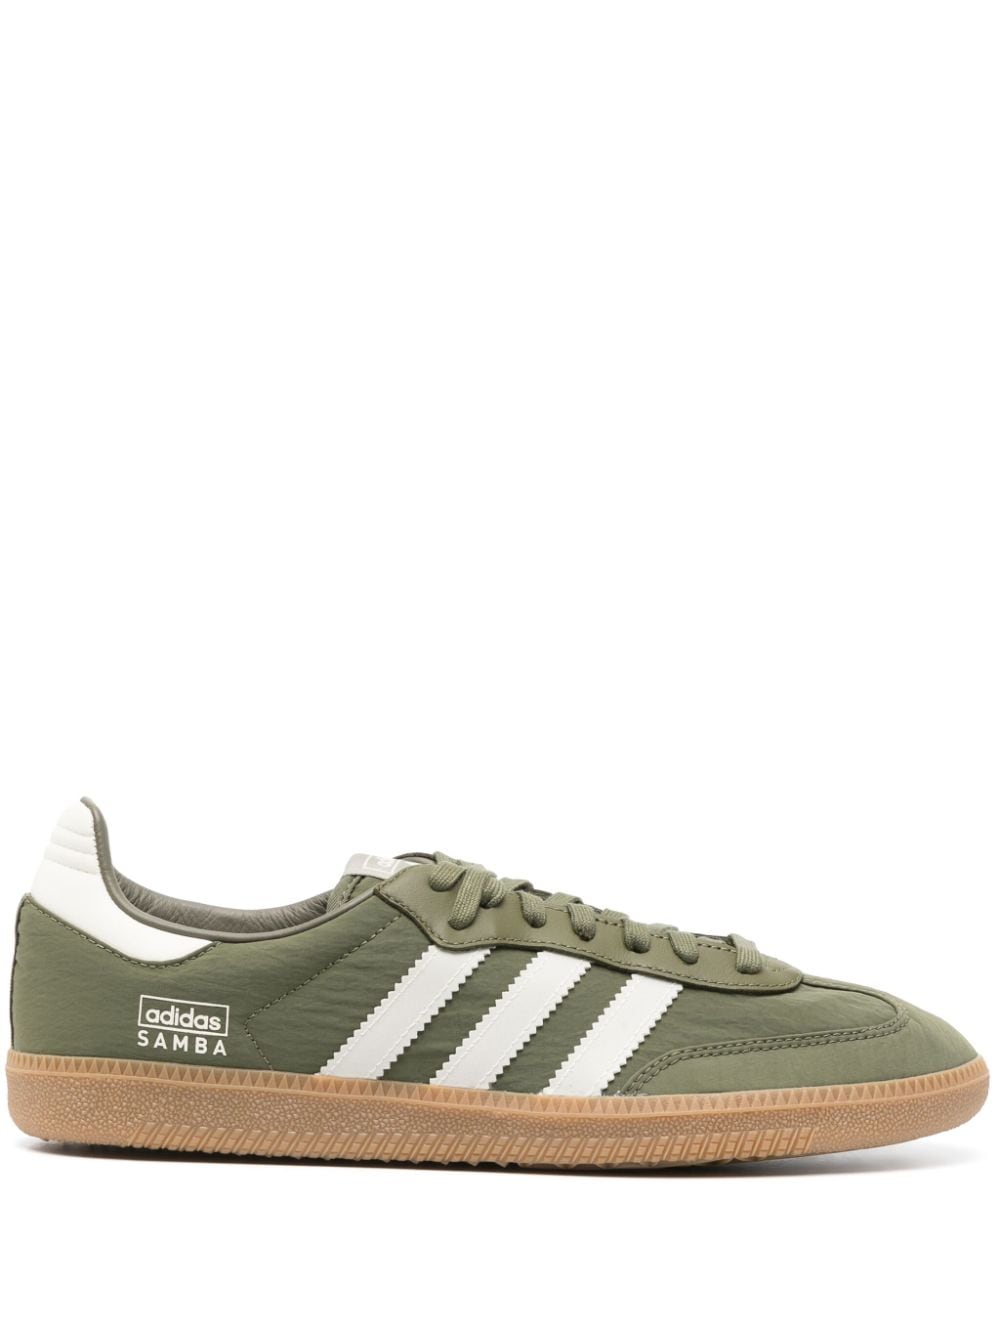 adidas Samba OG sneakers - Green